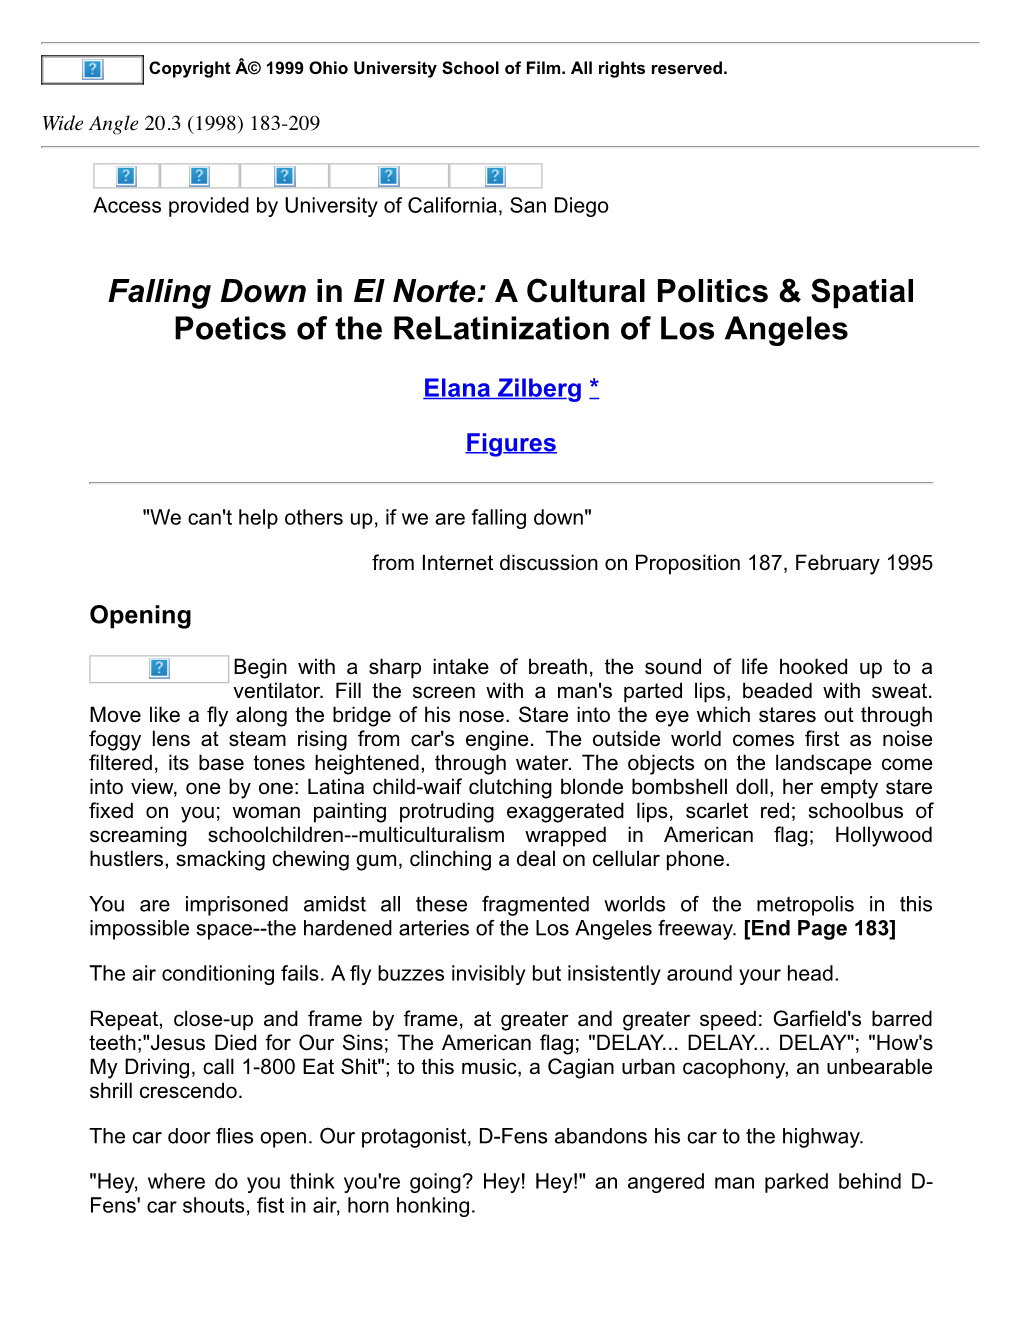 Falling Down in El Norte: a Cultural Politics & Spatial Poetics of the Relatinization of Los Angeles